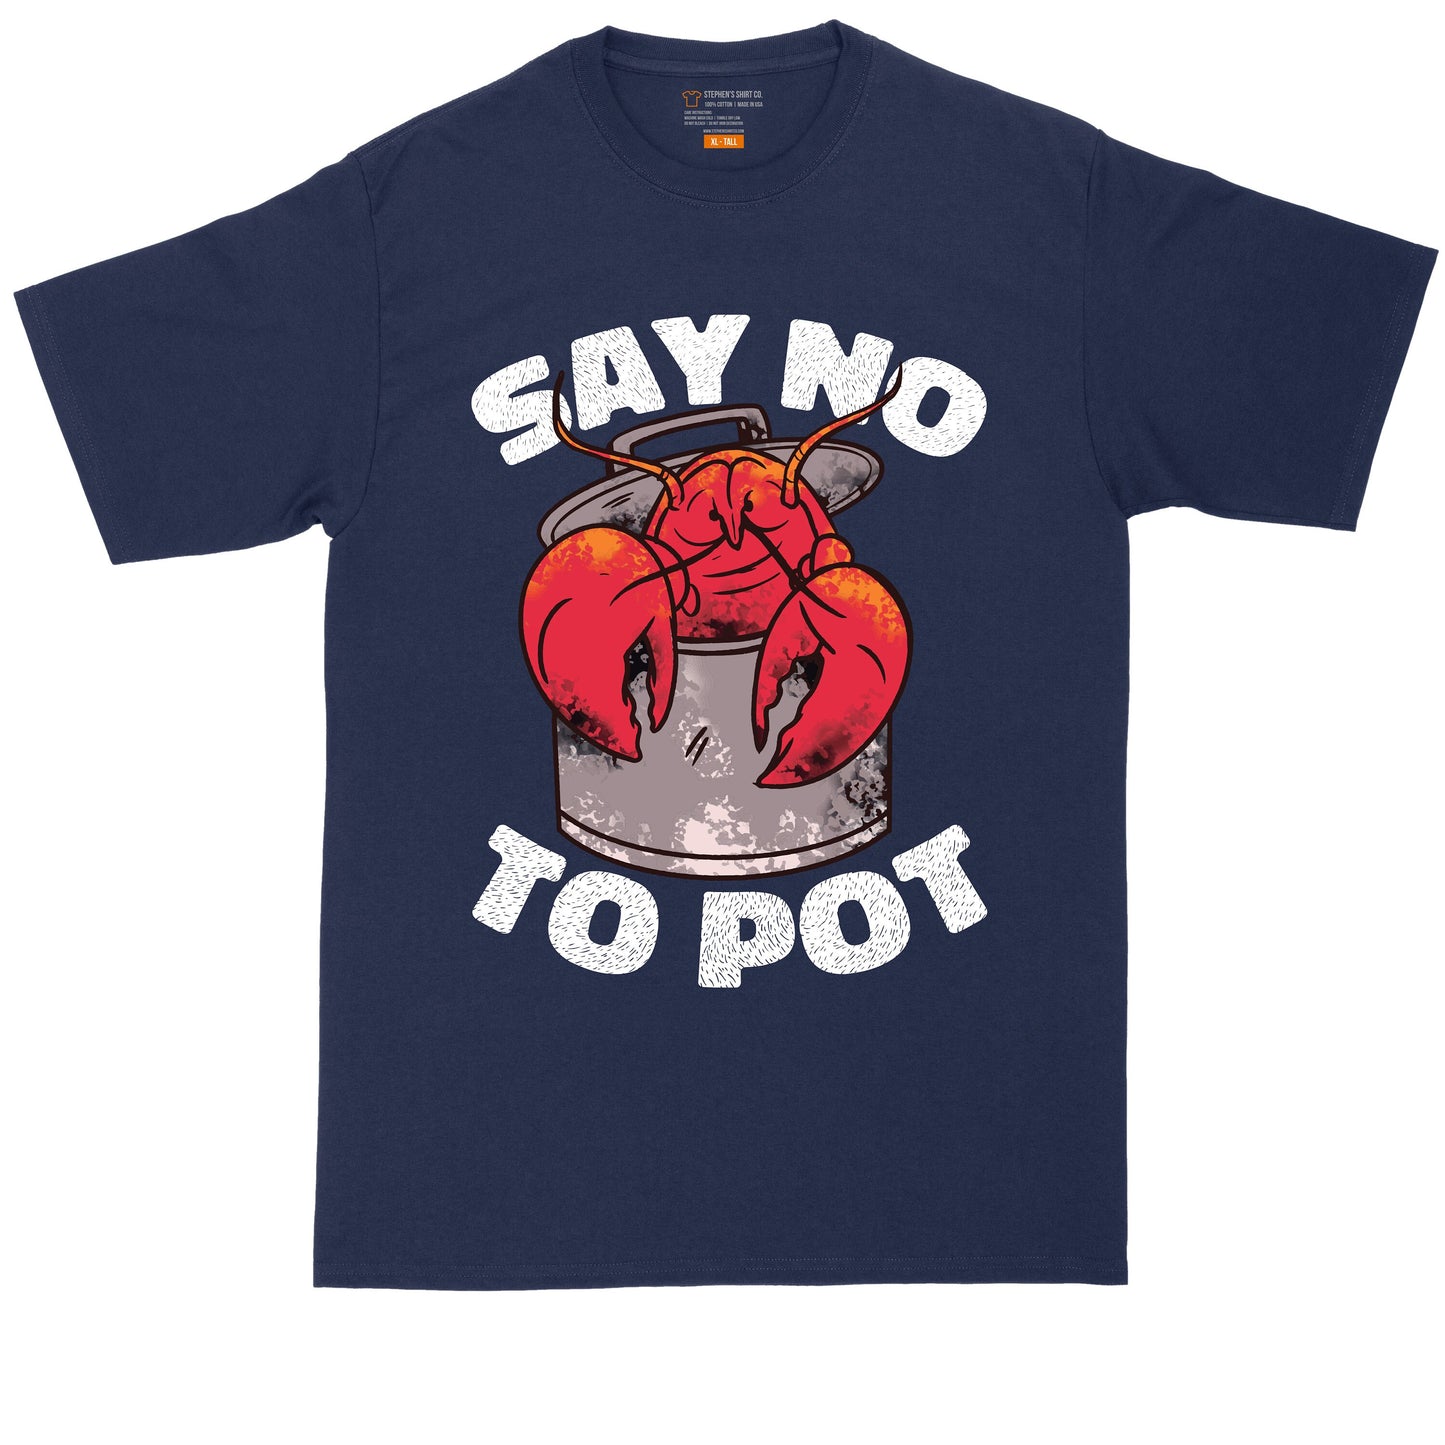 Say No to Pot | Big and Tall Men | Funny Shirt | Sarcastic Shirt | Big Guy Shirt | Bathroom Shirt | Astronaut Shirt